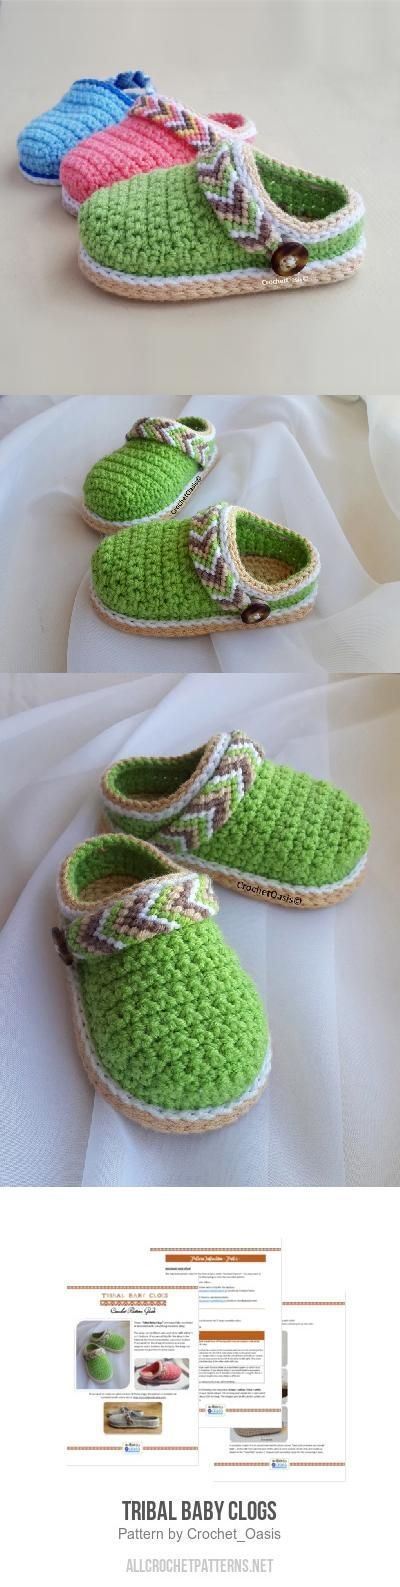 Tribal-Baby-Clogs-crochet-pattern.jpg